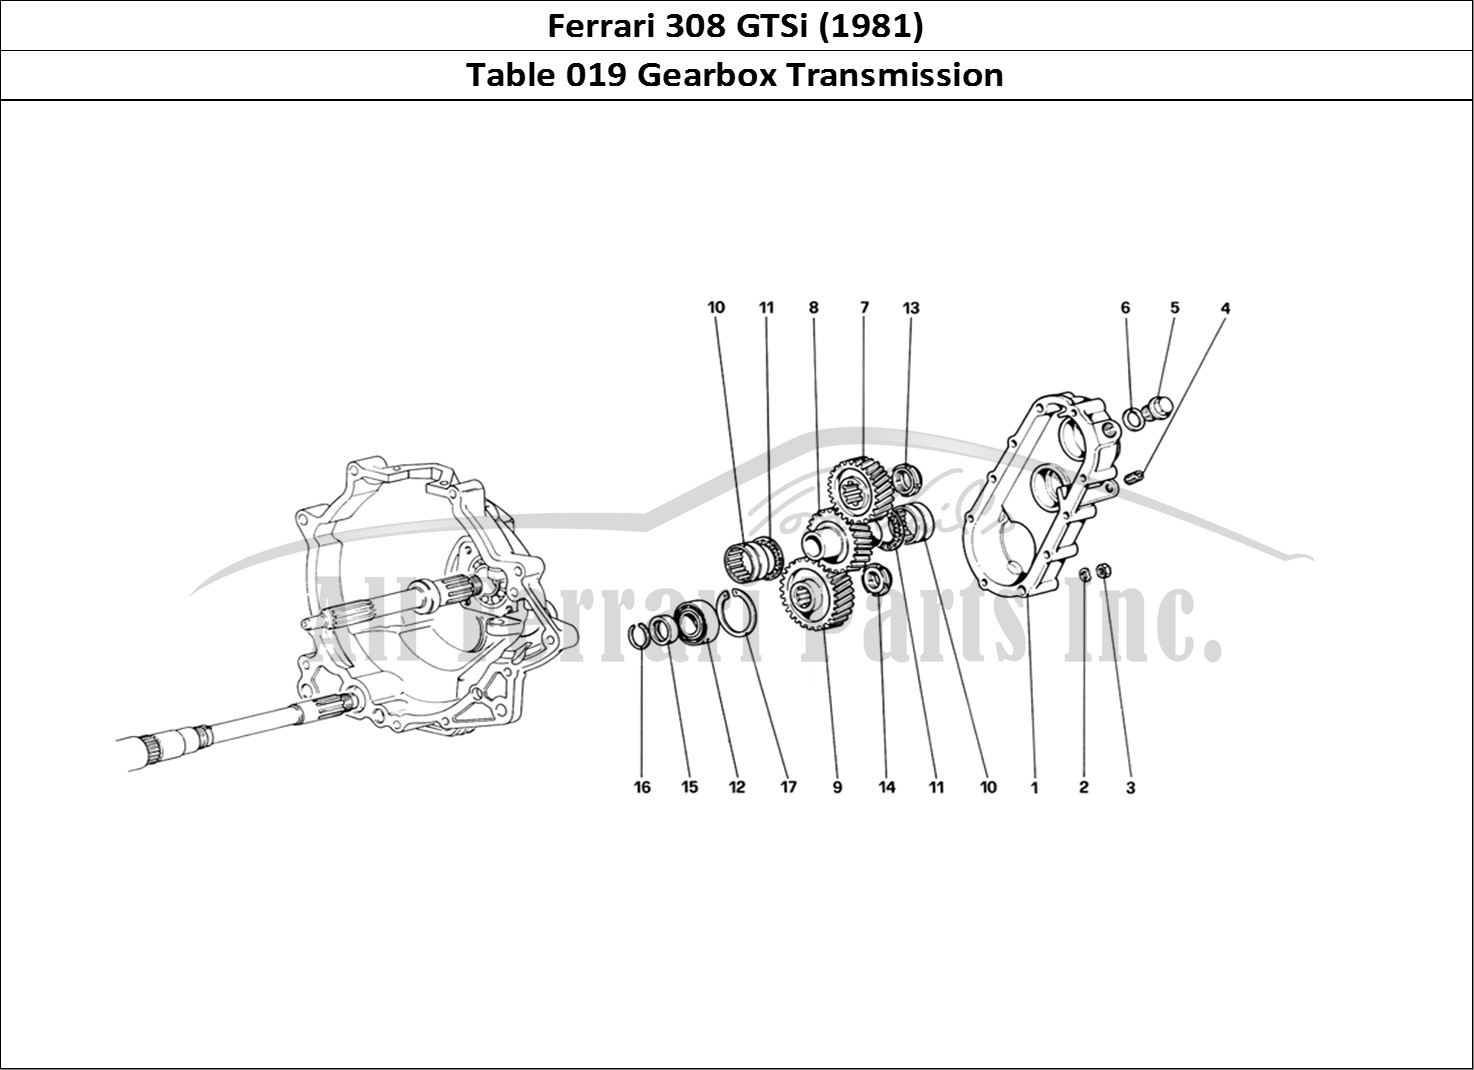 Ferrari Parts Ferrari 308 GTBi (1981) Page 019 Gearbox Transmission